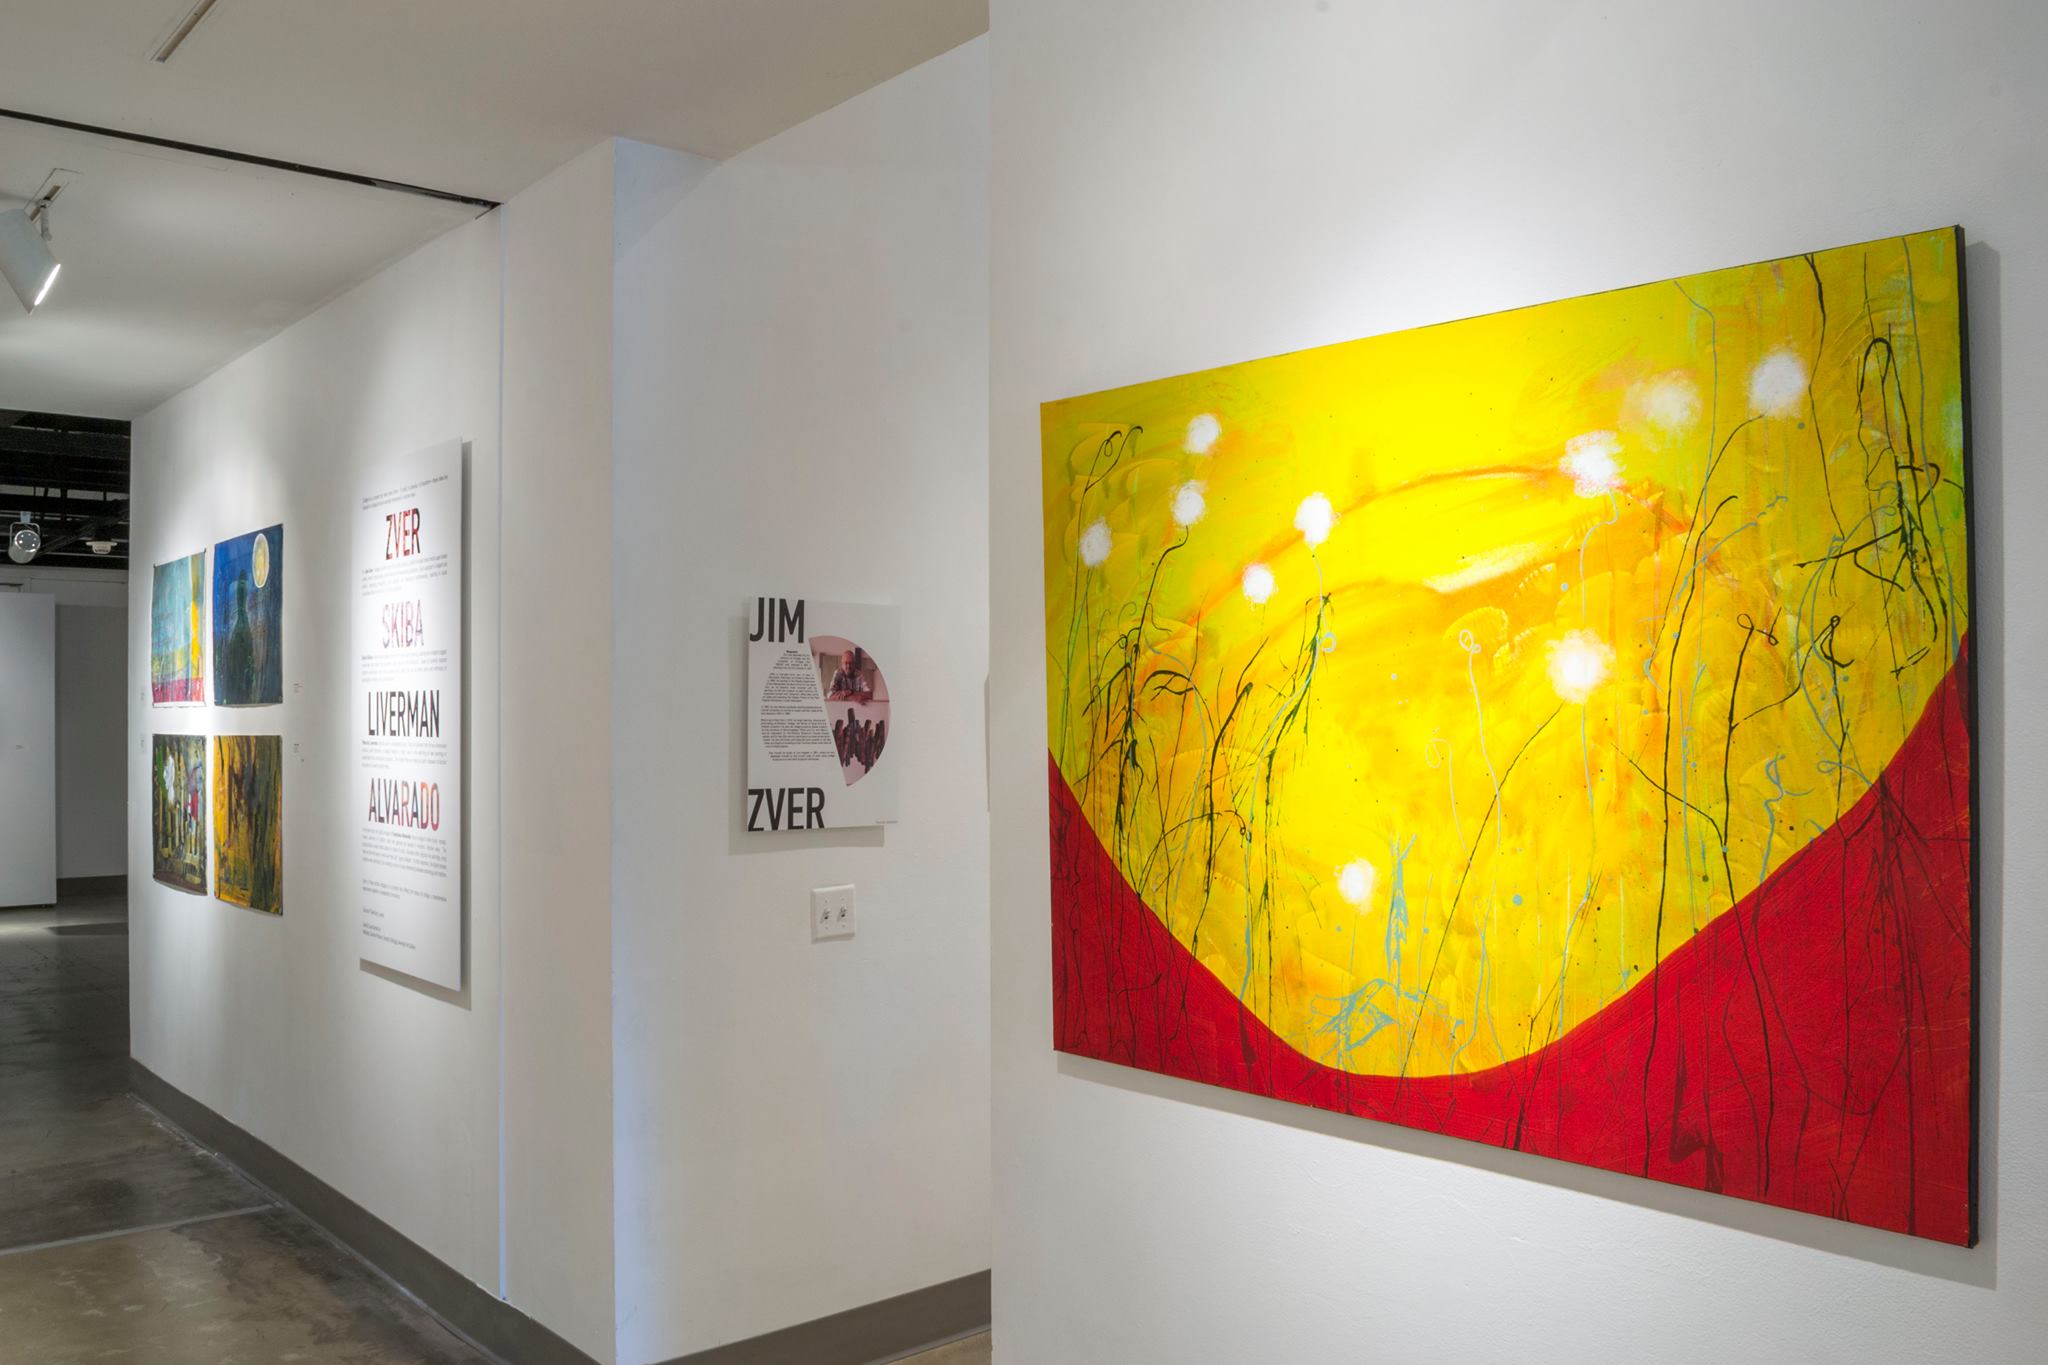 Installation View, Corridor of Gallery, Francisco Alvarado, Patricia Liverman, Karin Skiba & Jim Zver Exhibition, July 7, 2014 to August 16, 2014